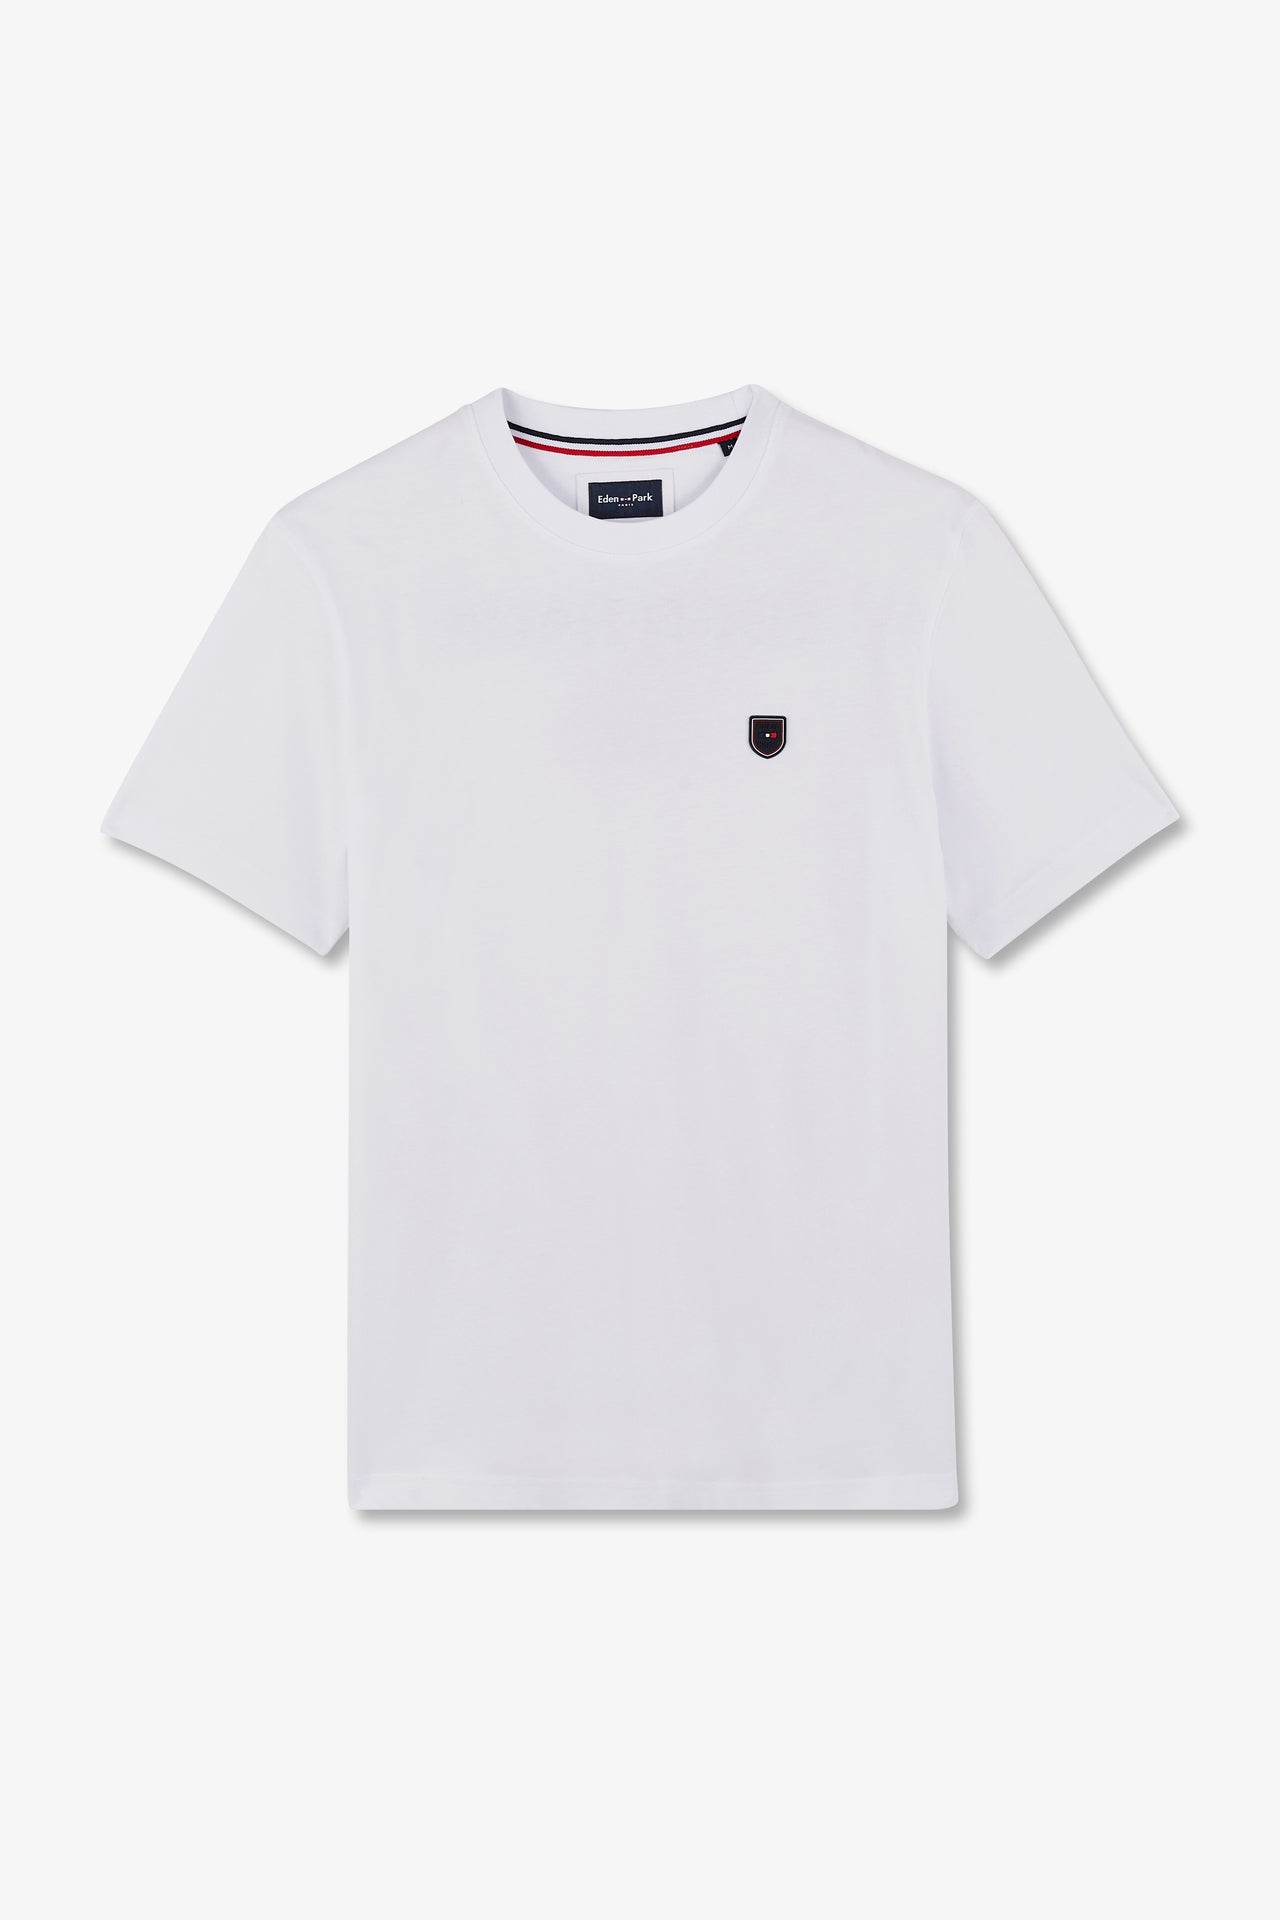 T-shirt blanc avec broderie Eden Park - Image 2